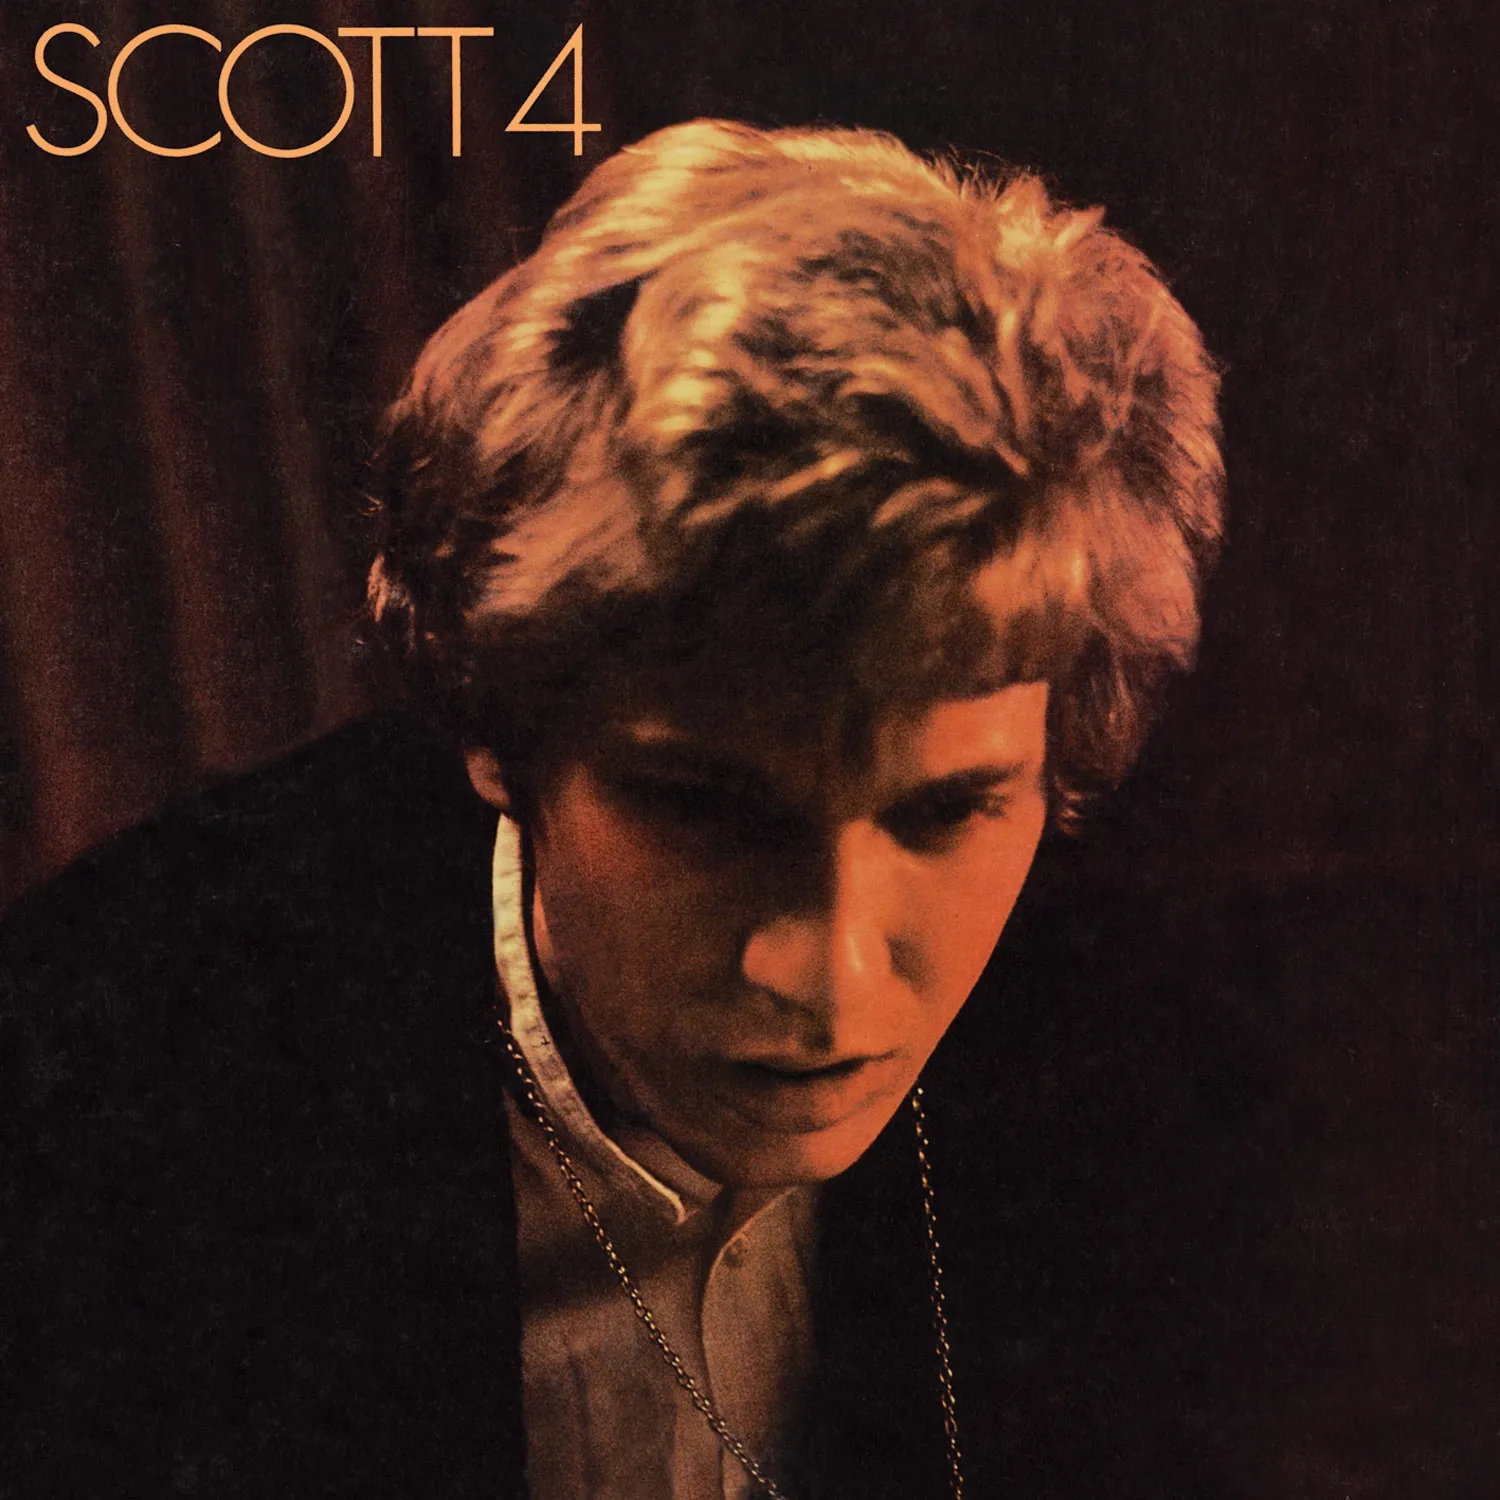 <strong>Scott Walker - Scott 4</strong> (Vinyl LP - black)